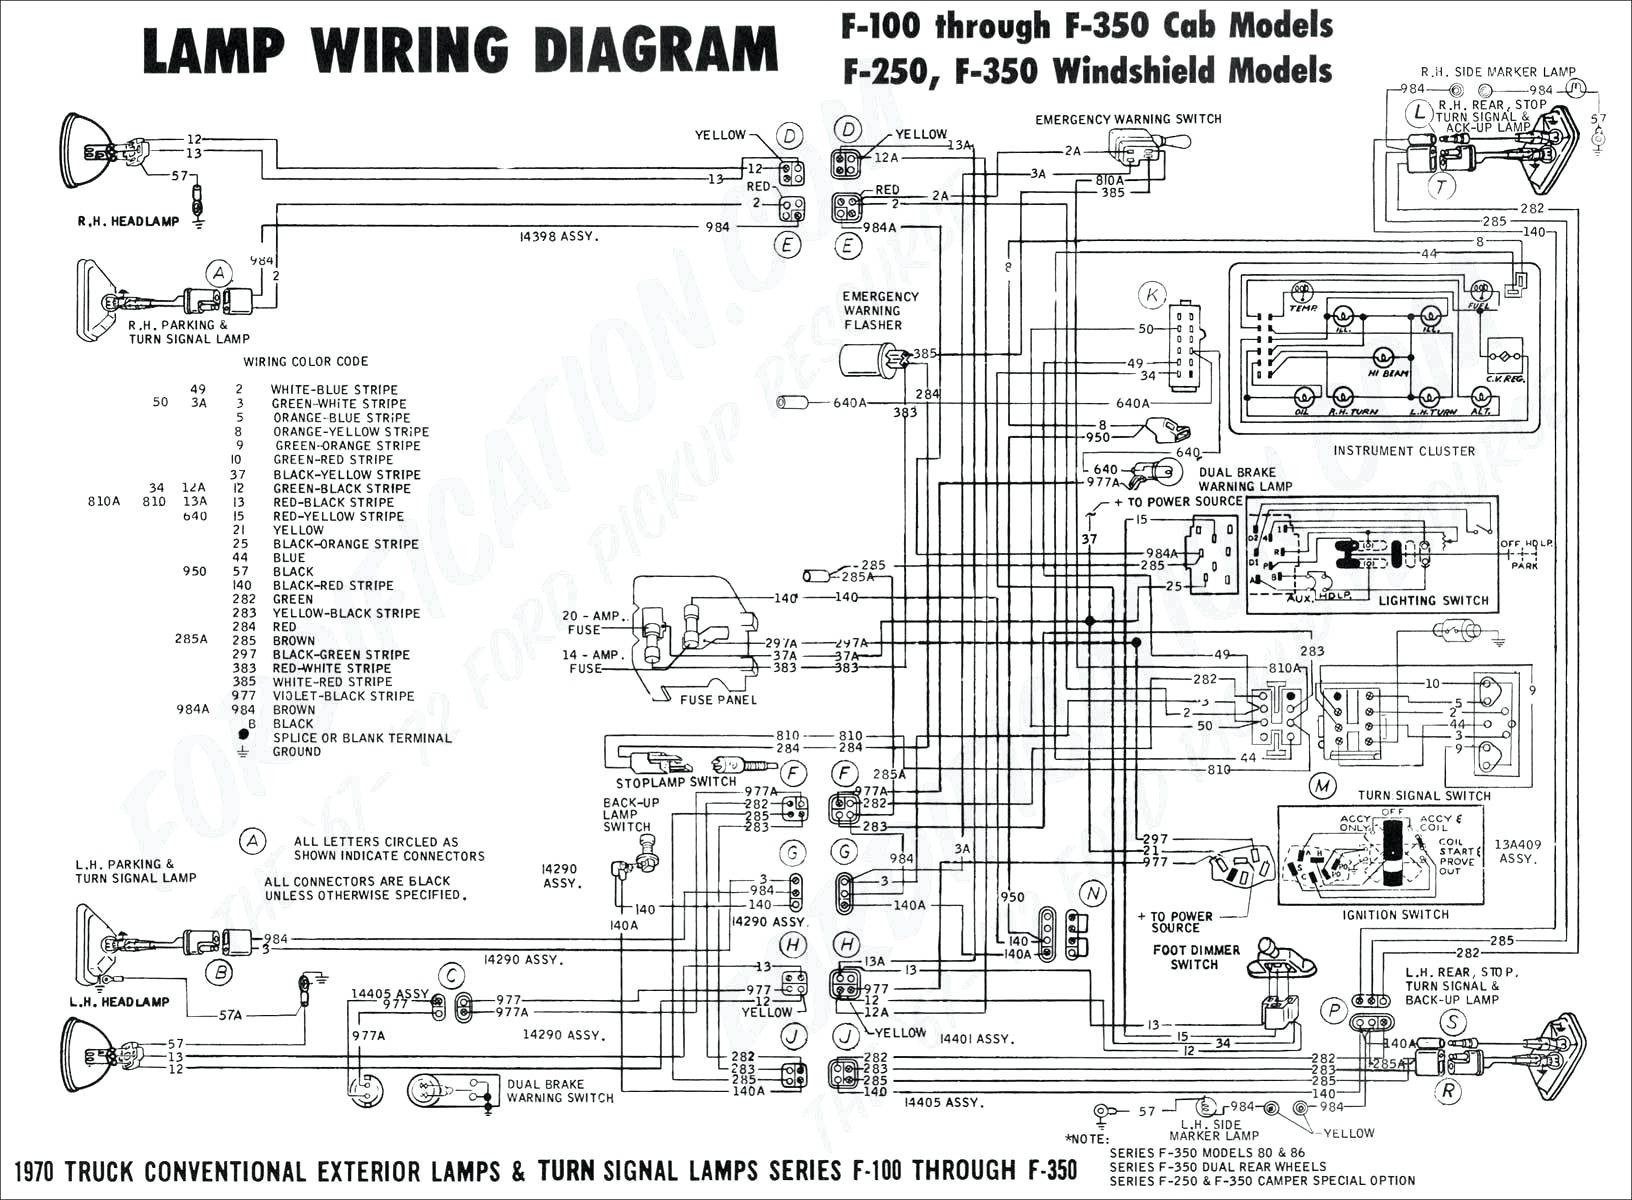 Car Power Antenna Wiring Diagram 4f2045 Manow Ns2 Name Wiring Diagram for 2012 Morgan Of Car Power Antenna Wiring Diagram